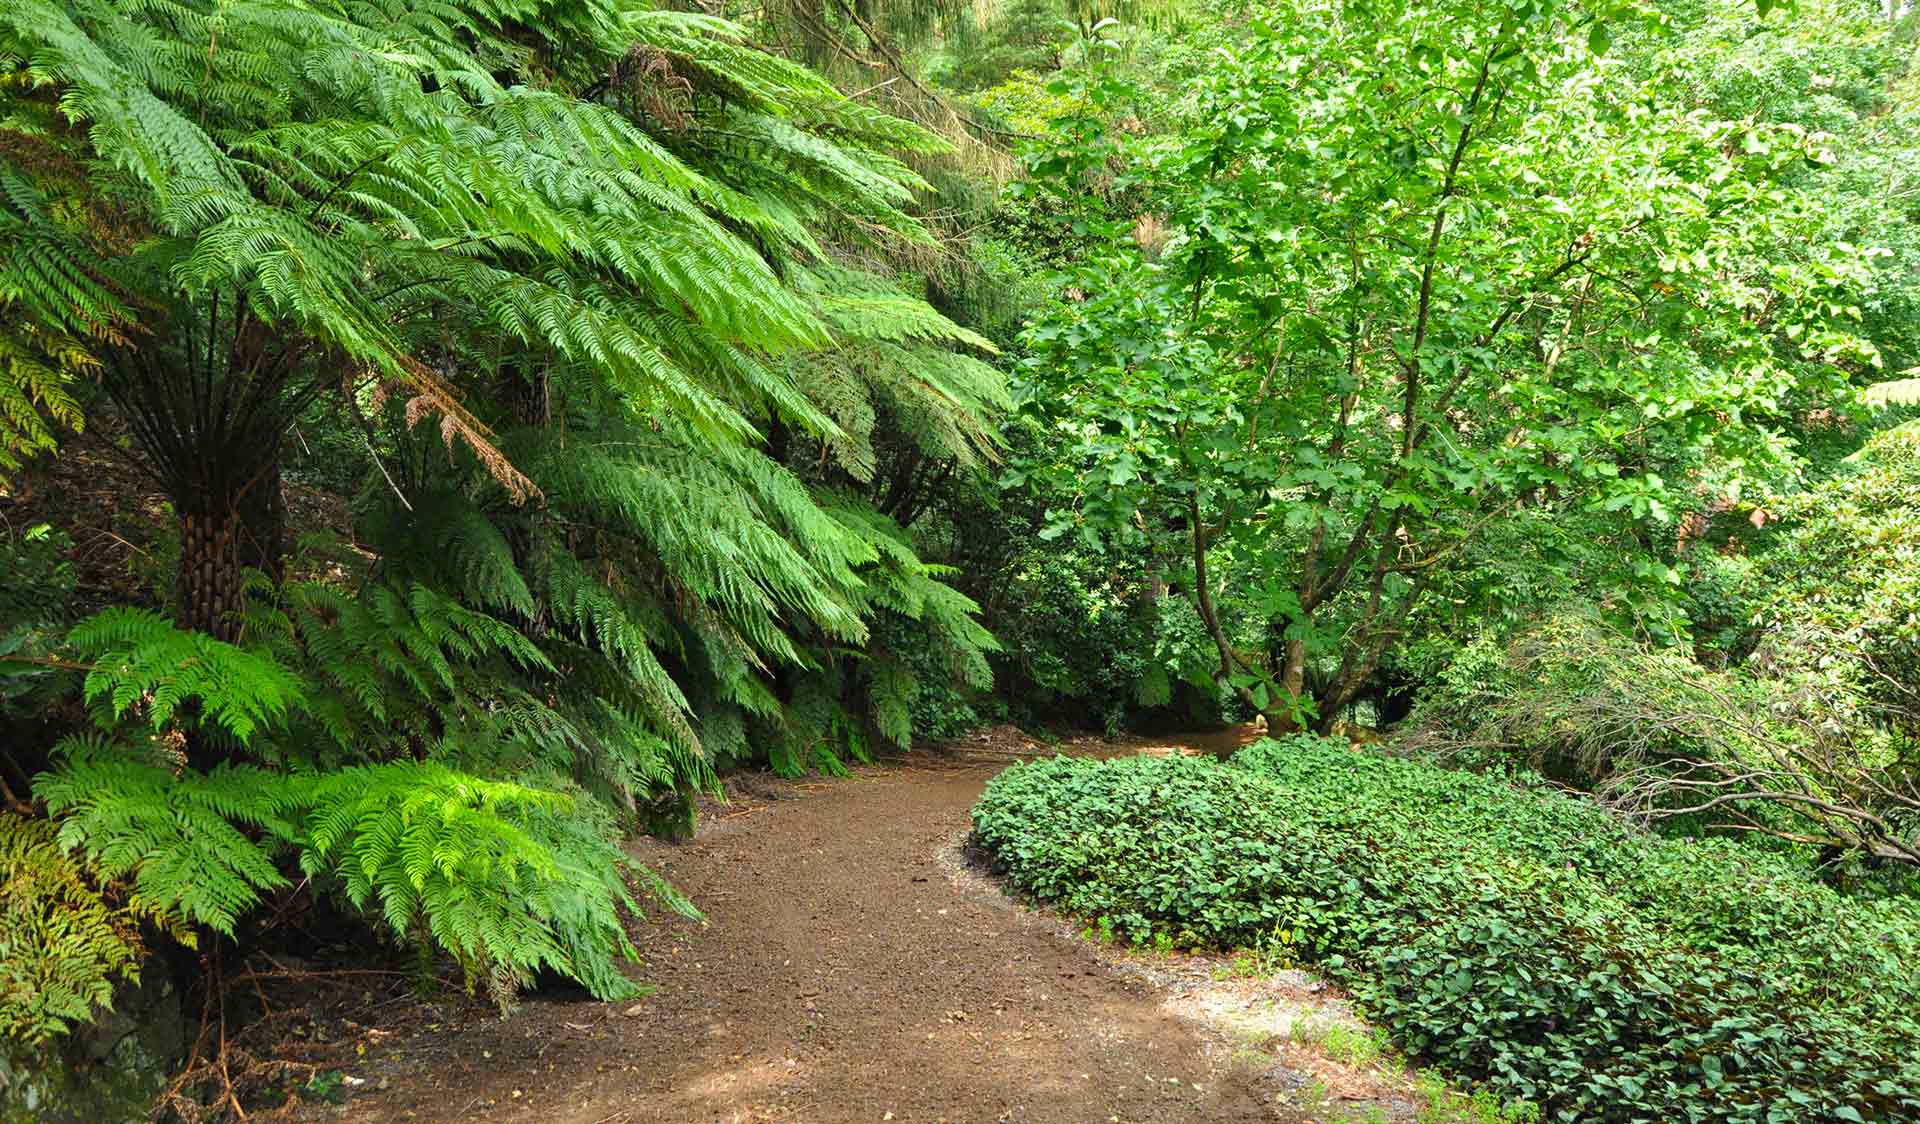 A path in Pirianda Garden in the Dandenong Ranges National Park.